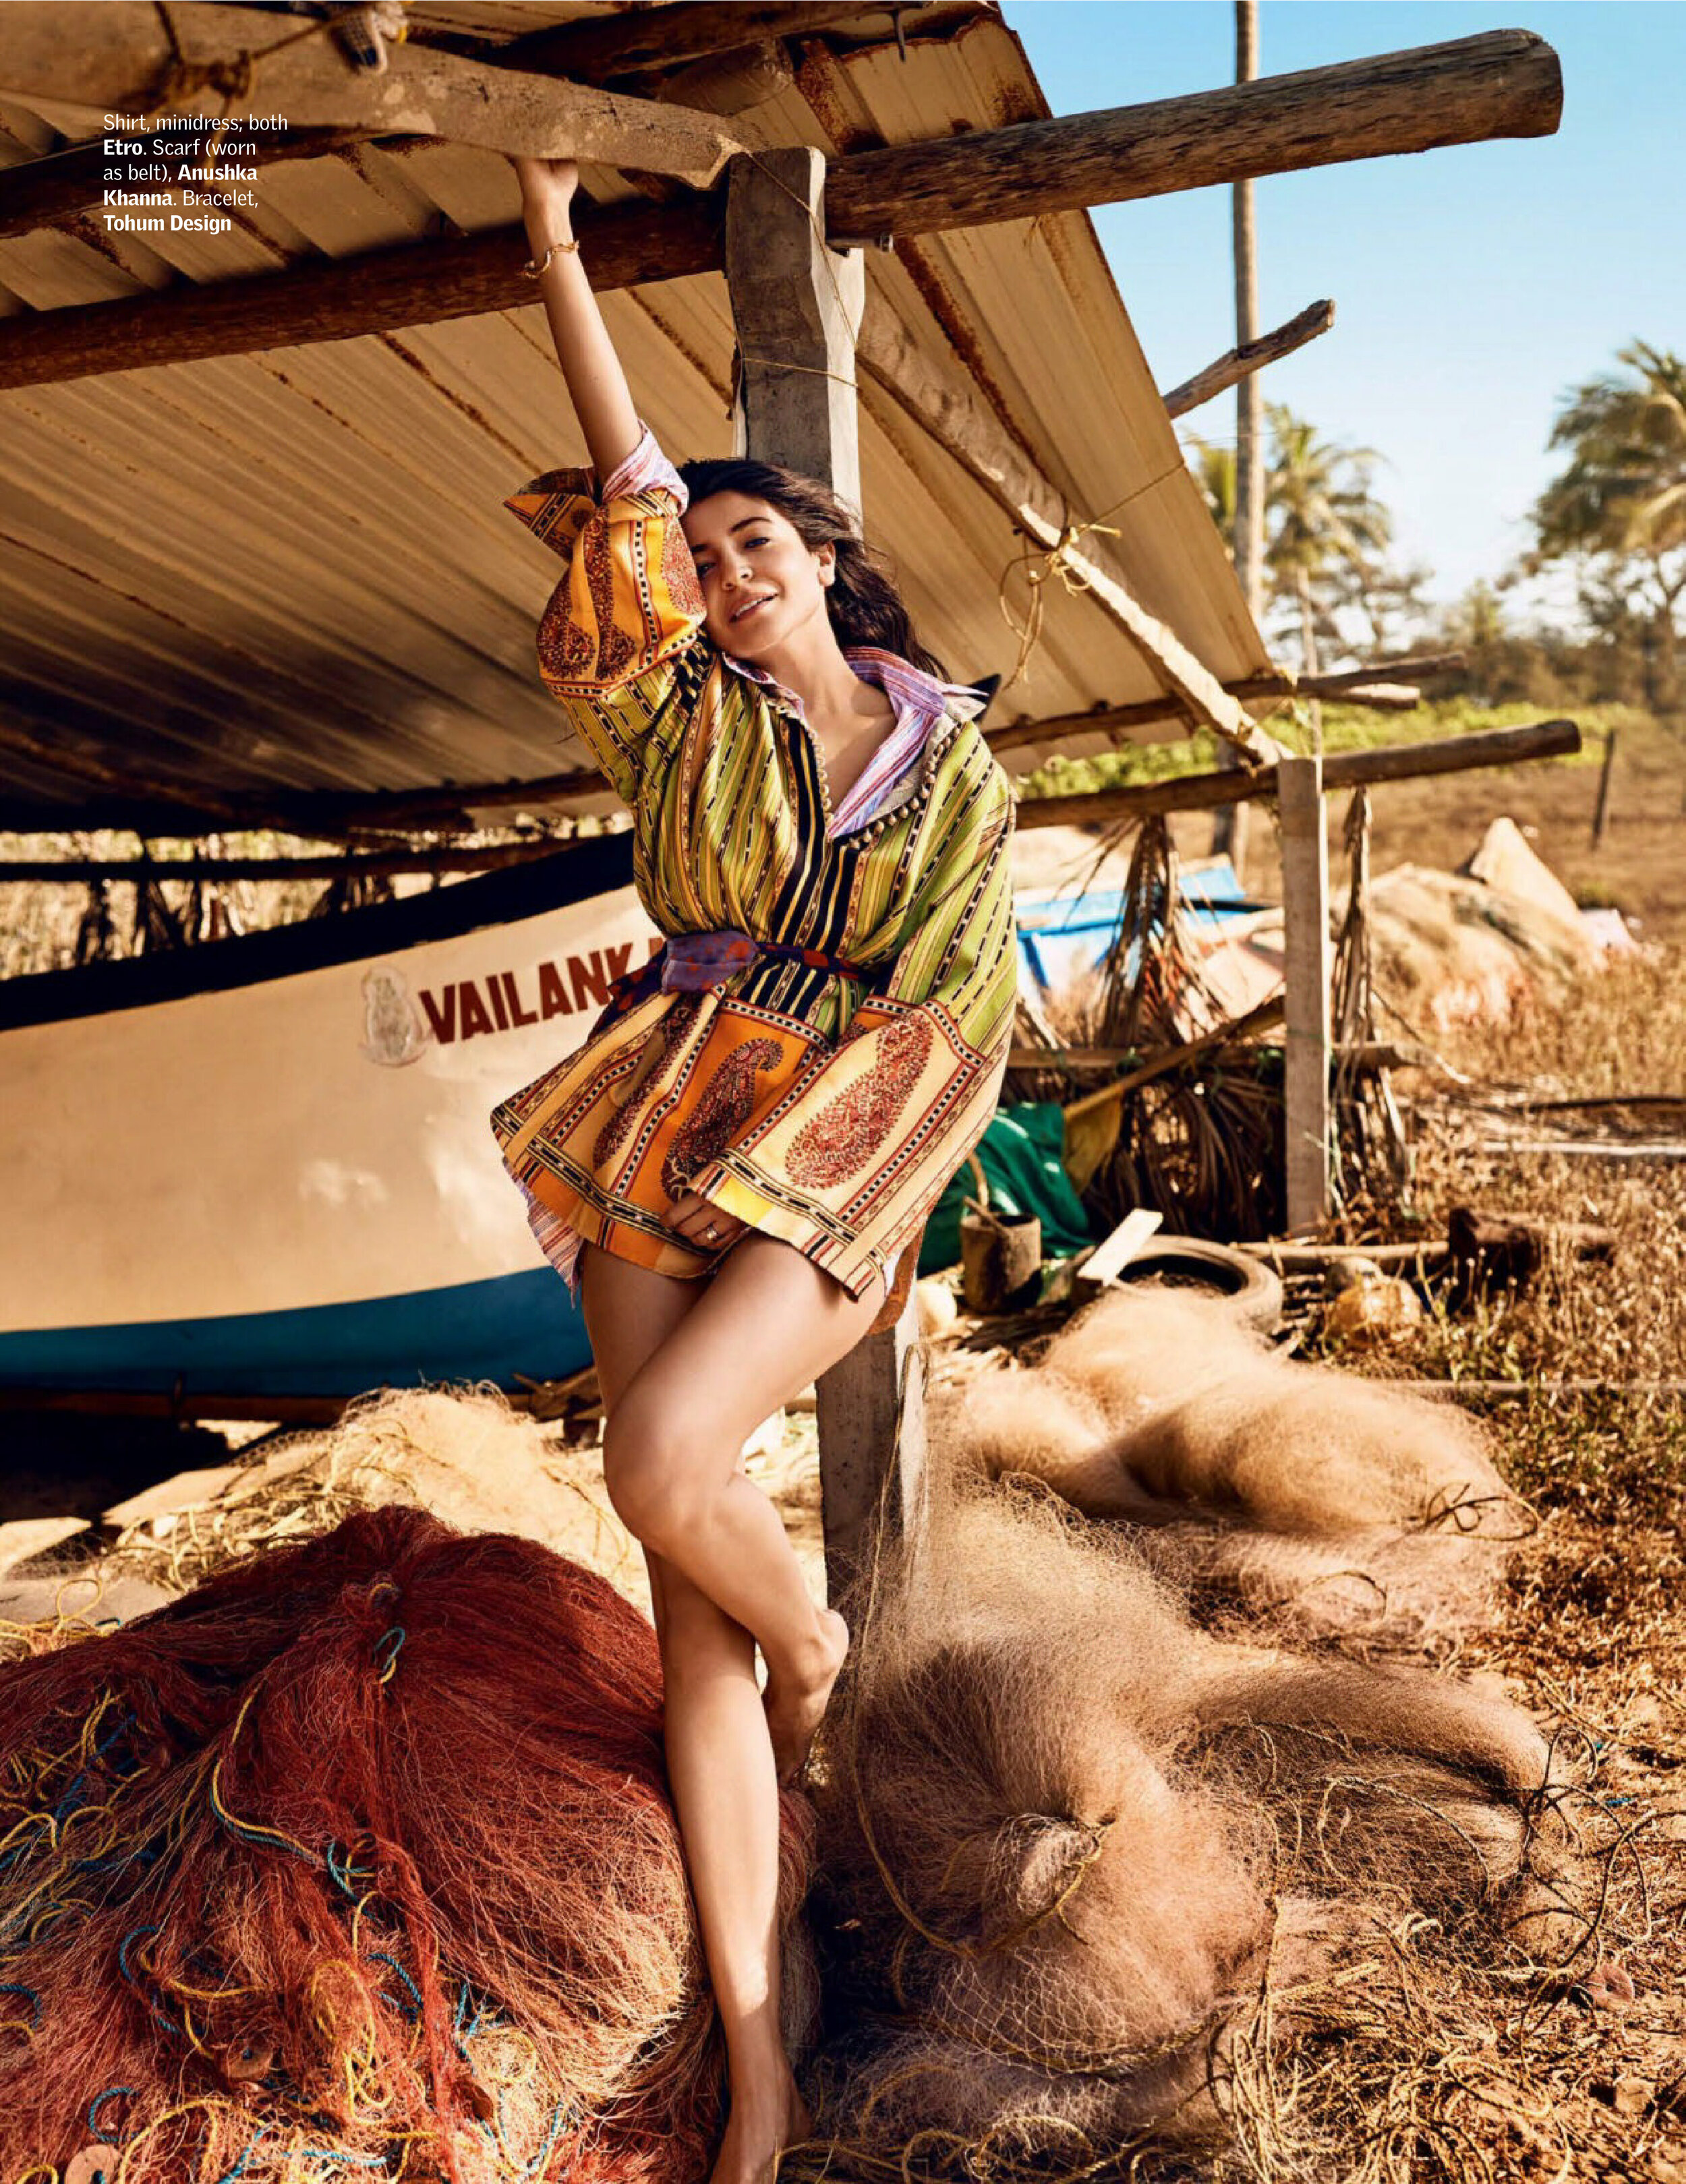 Anushka Sharma by Billy Kidd for Vogue India July 2020 (7).jpg